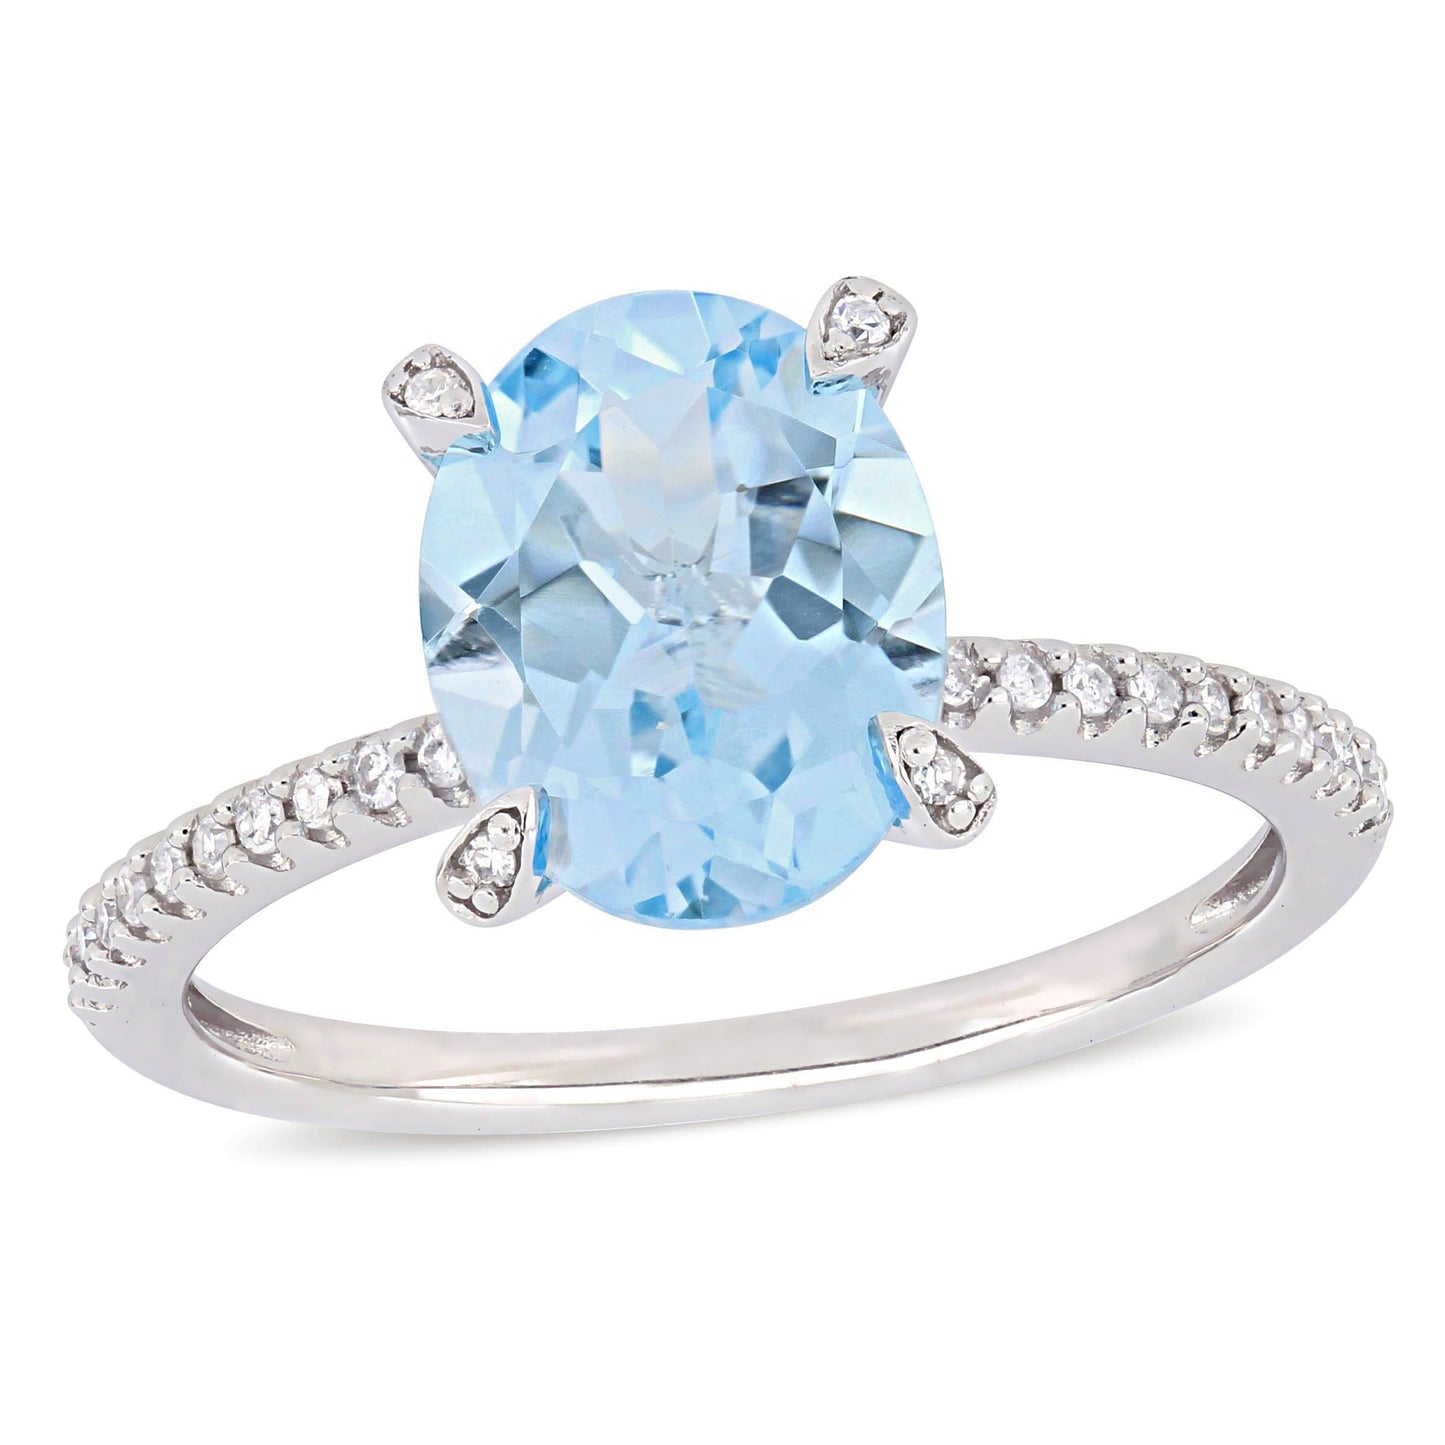 Sophia B 3 4/5ct Oval Cut Sky Blue Topaz & 1/10ct Diamond Ring